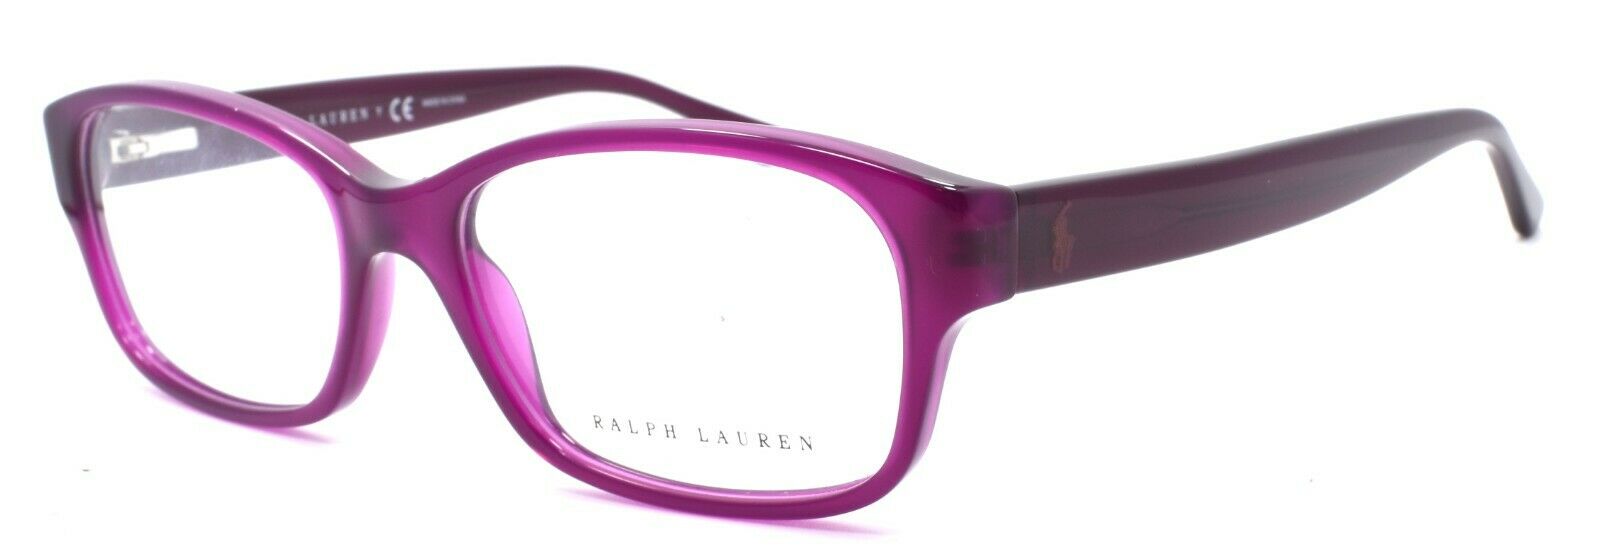 1-Ralph Lauren RL6111 5408 Women's Eyeglasses Frames 51-16-140 Purple-8053672150179-IKSpecs